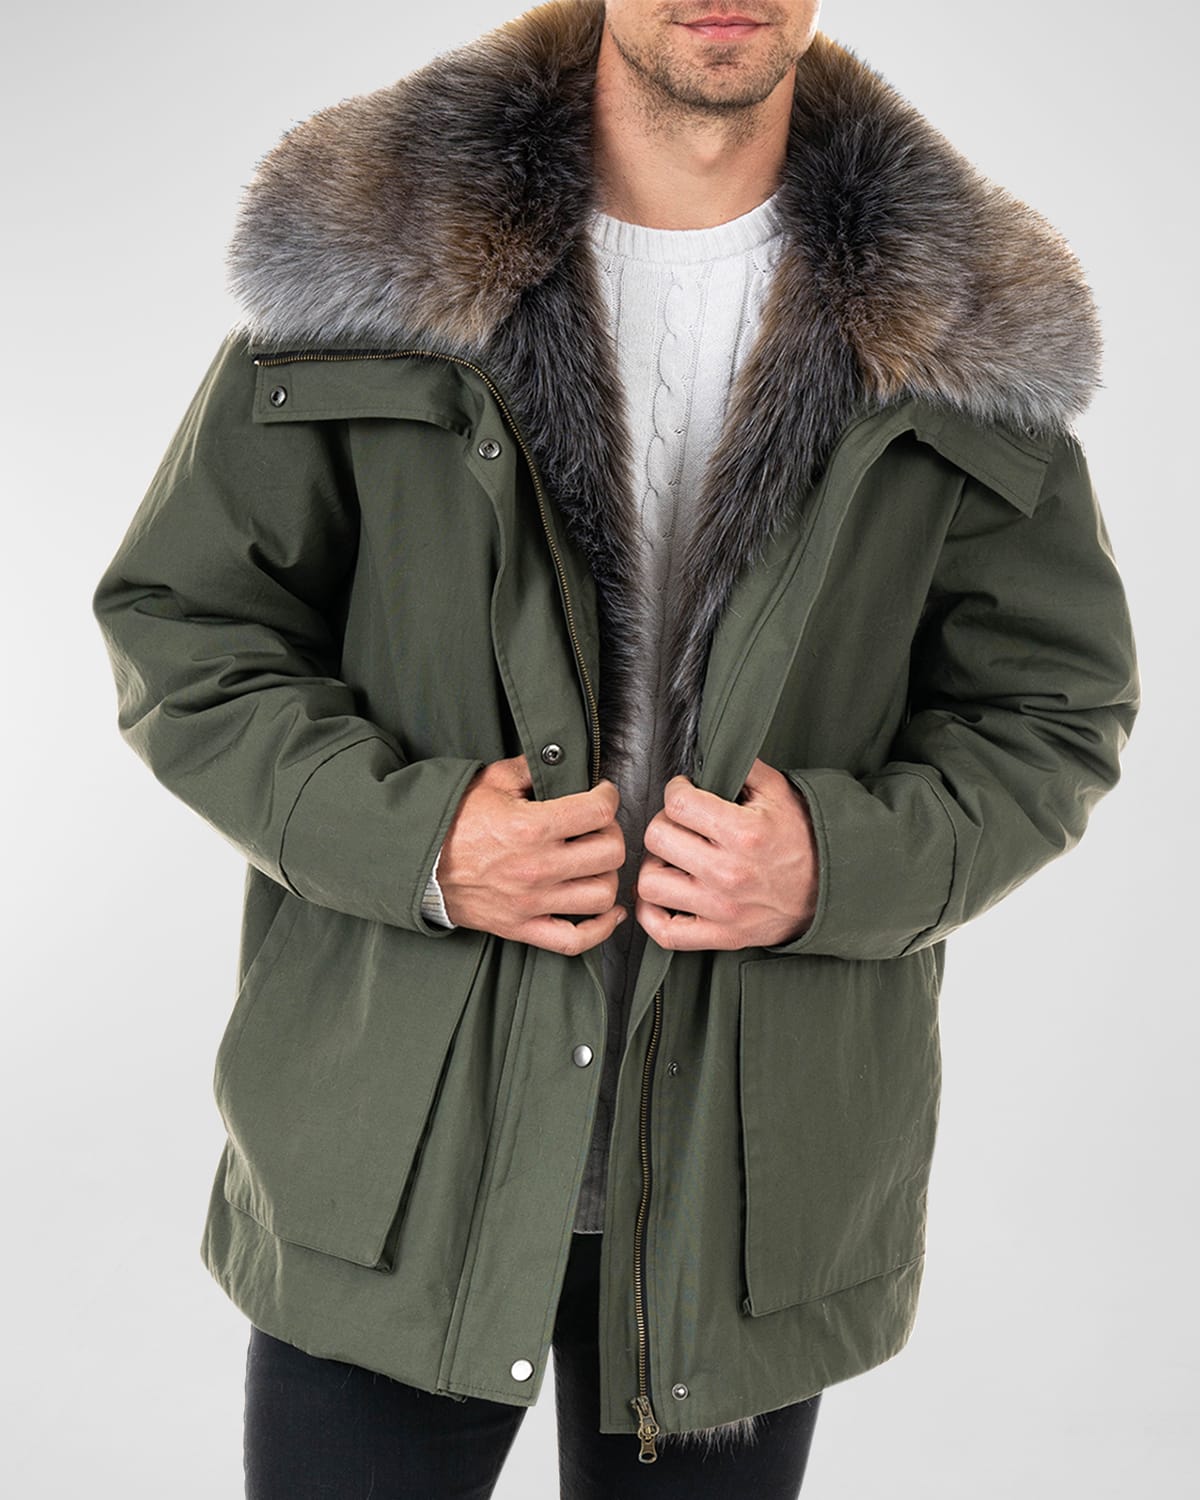 Fabulous Furs Men's Alpine Anorak Coat w/ Faux Fur